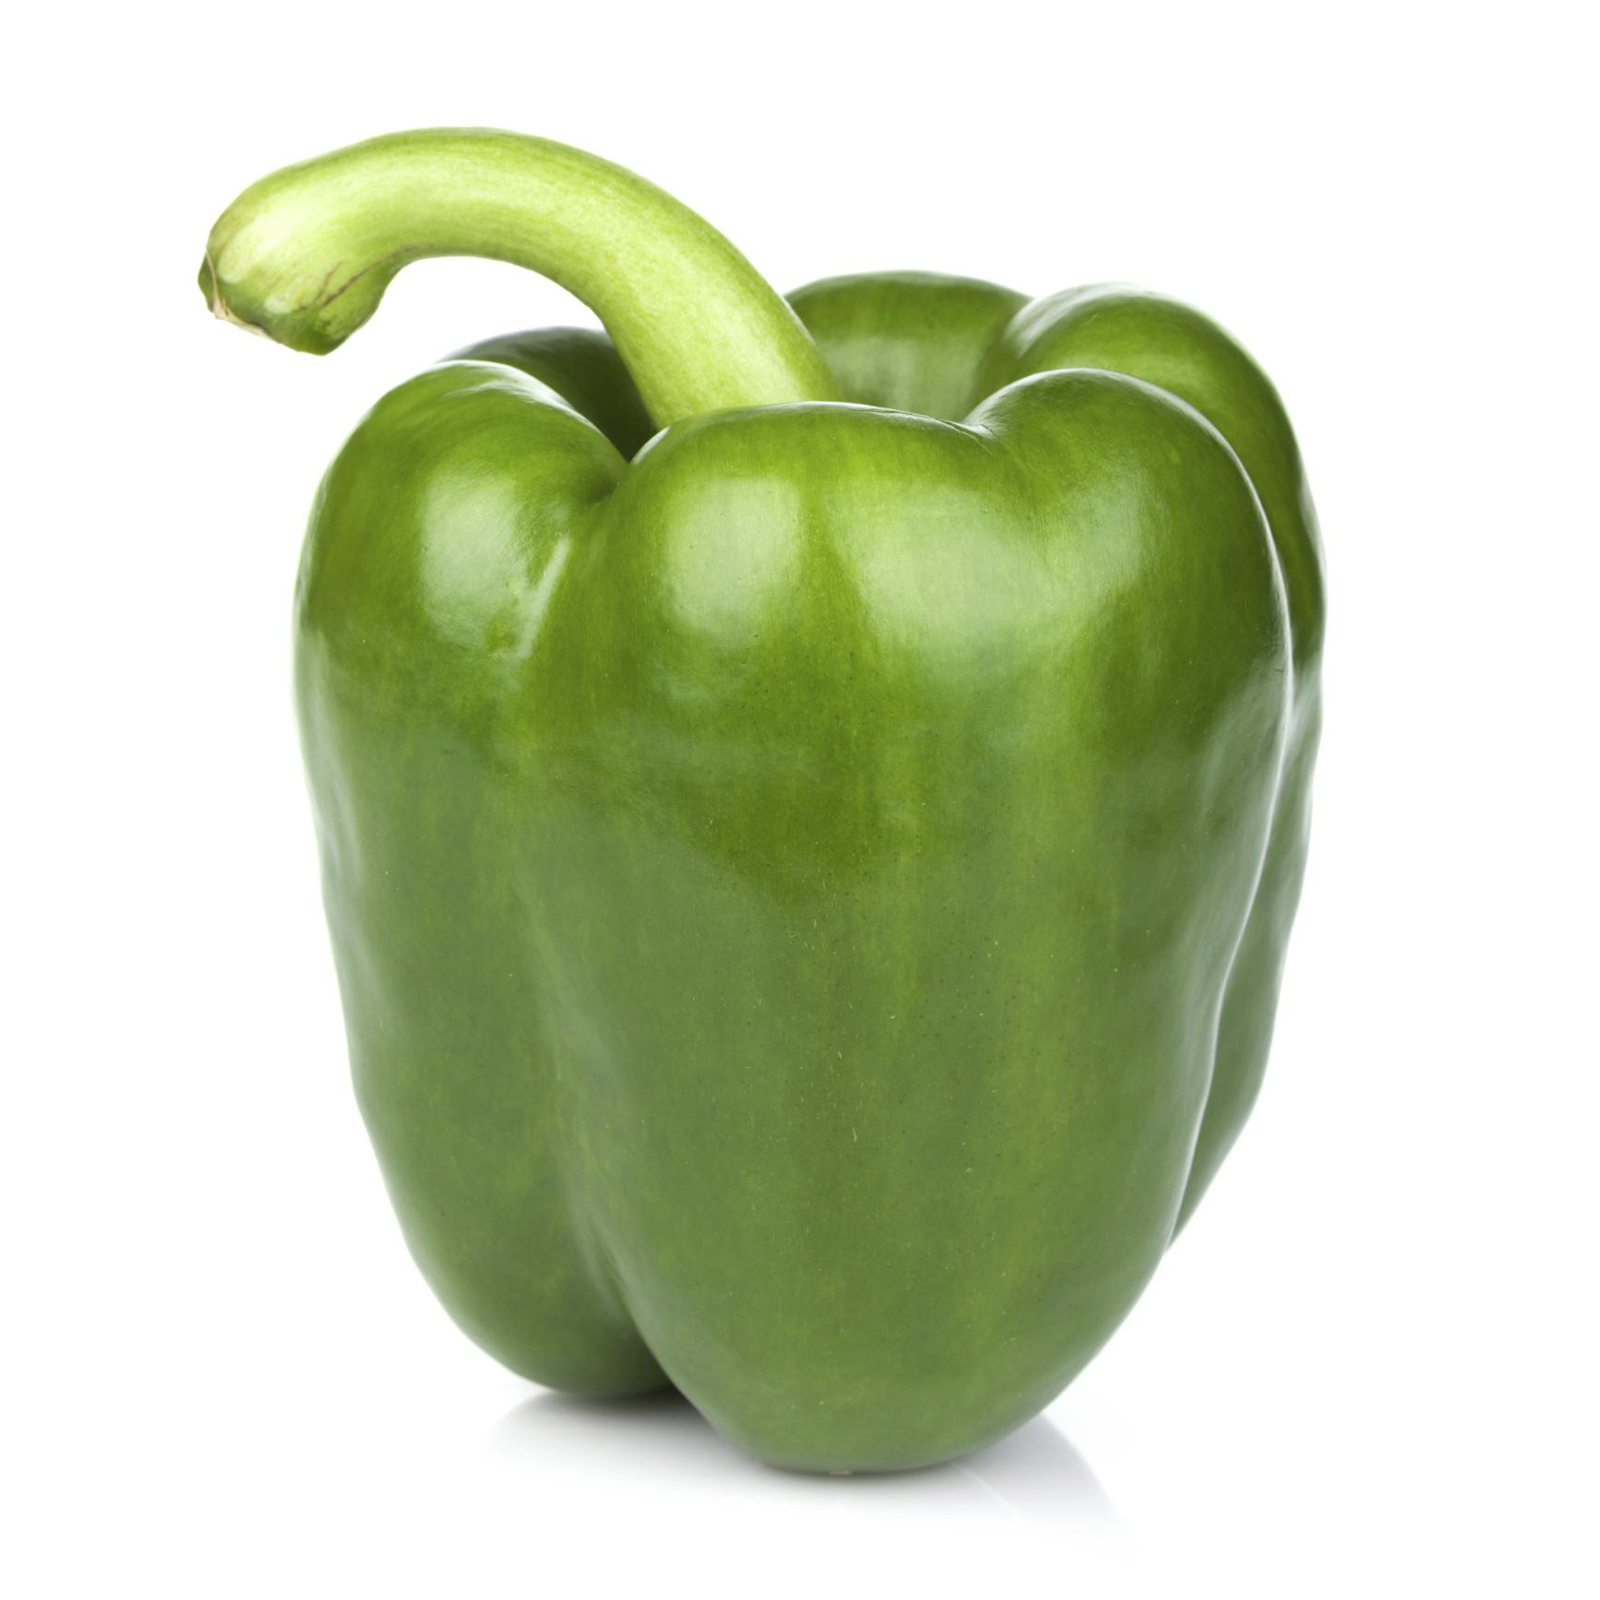 RealFoodToronto-Organic-Green-Bell-Pepper.jpg